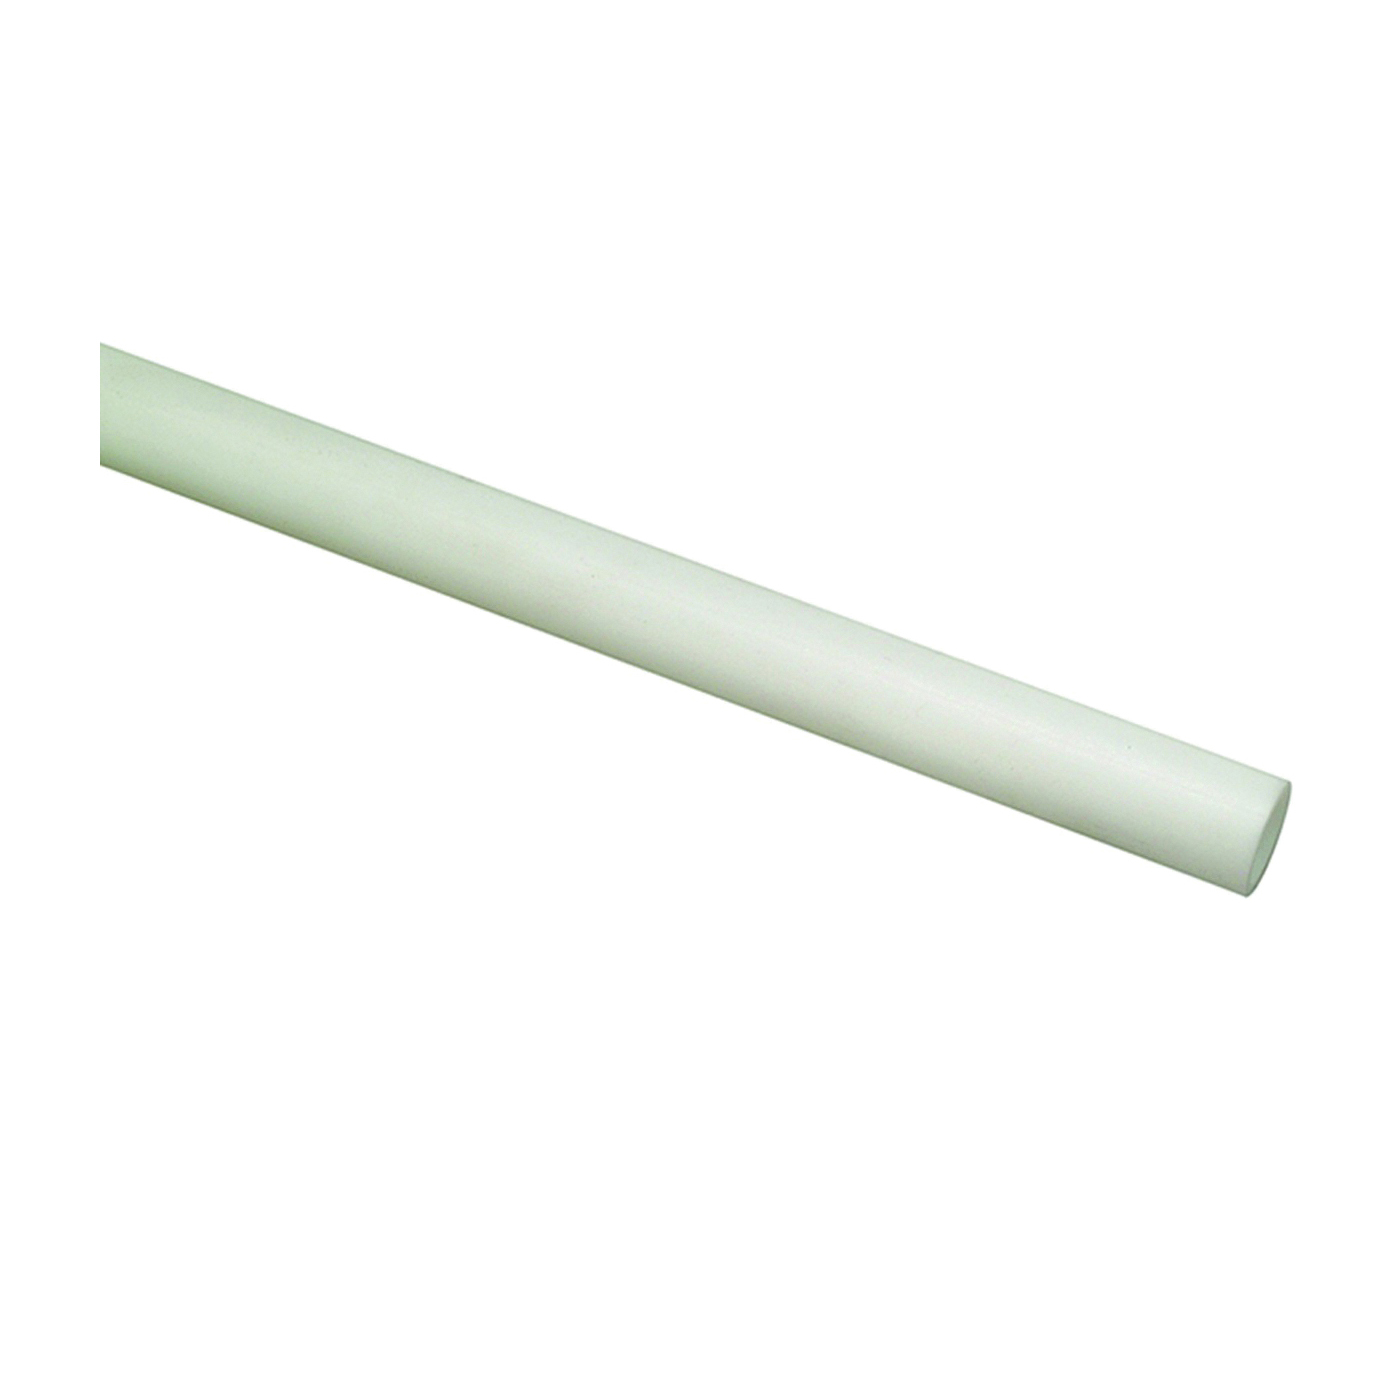 APPW51 PEX-B Pipe Tubing, 1 in, White, 5 ft L